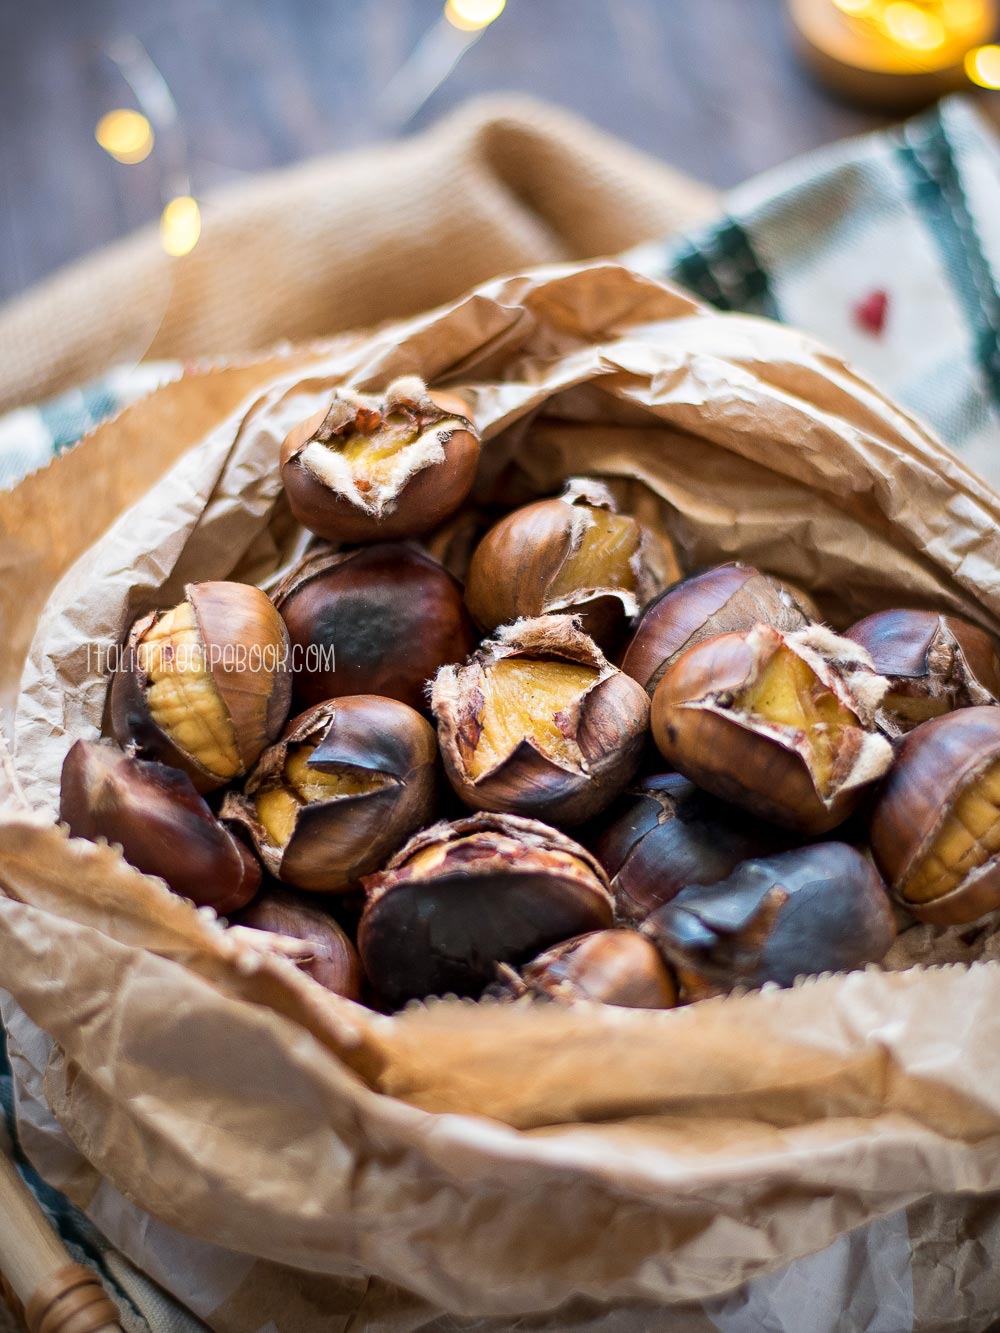 https://www.italianrecipebook.com/wp-content/uploads/2022/11/pan-roasted-chestnuts.jpg